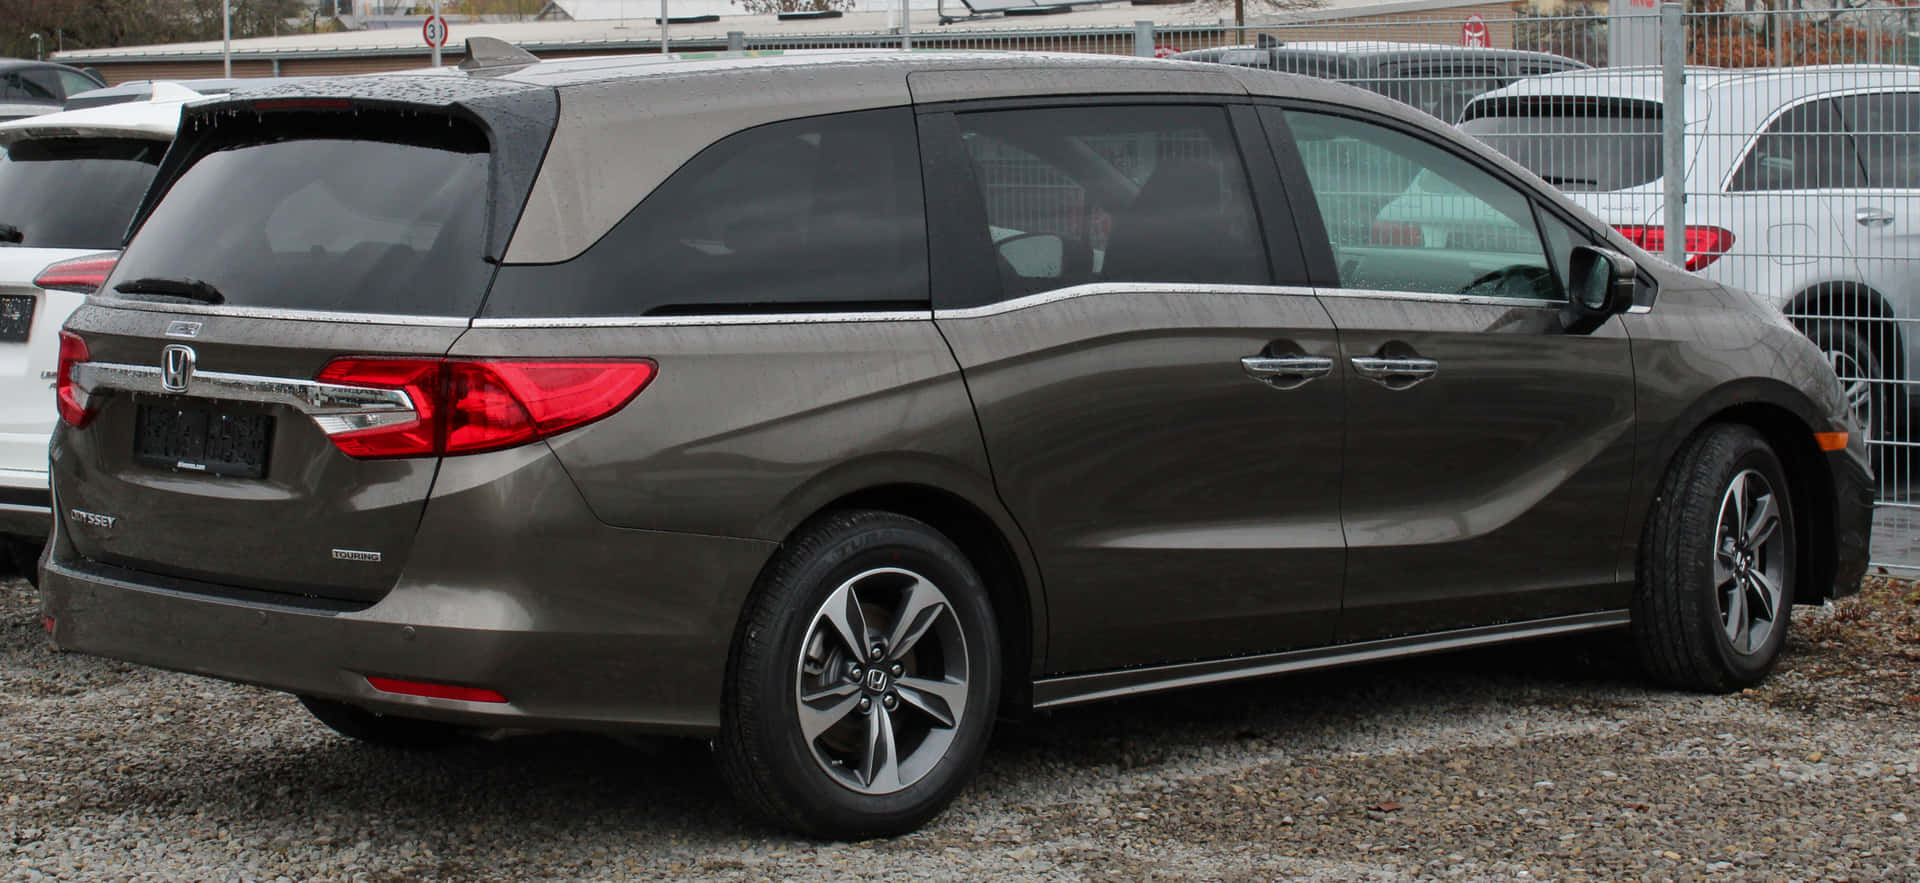 The Elegant 2021 Honda Odyssey Minivan In Striking Silver Wallpaper